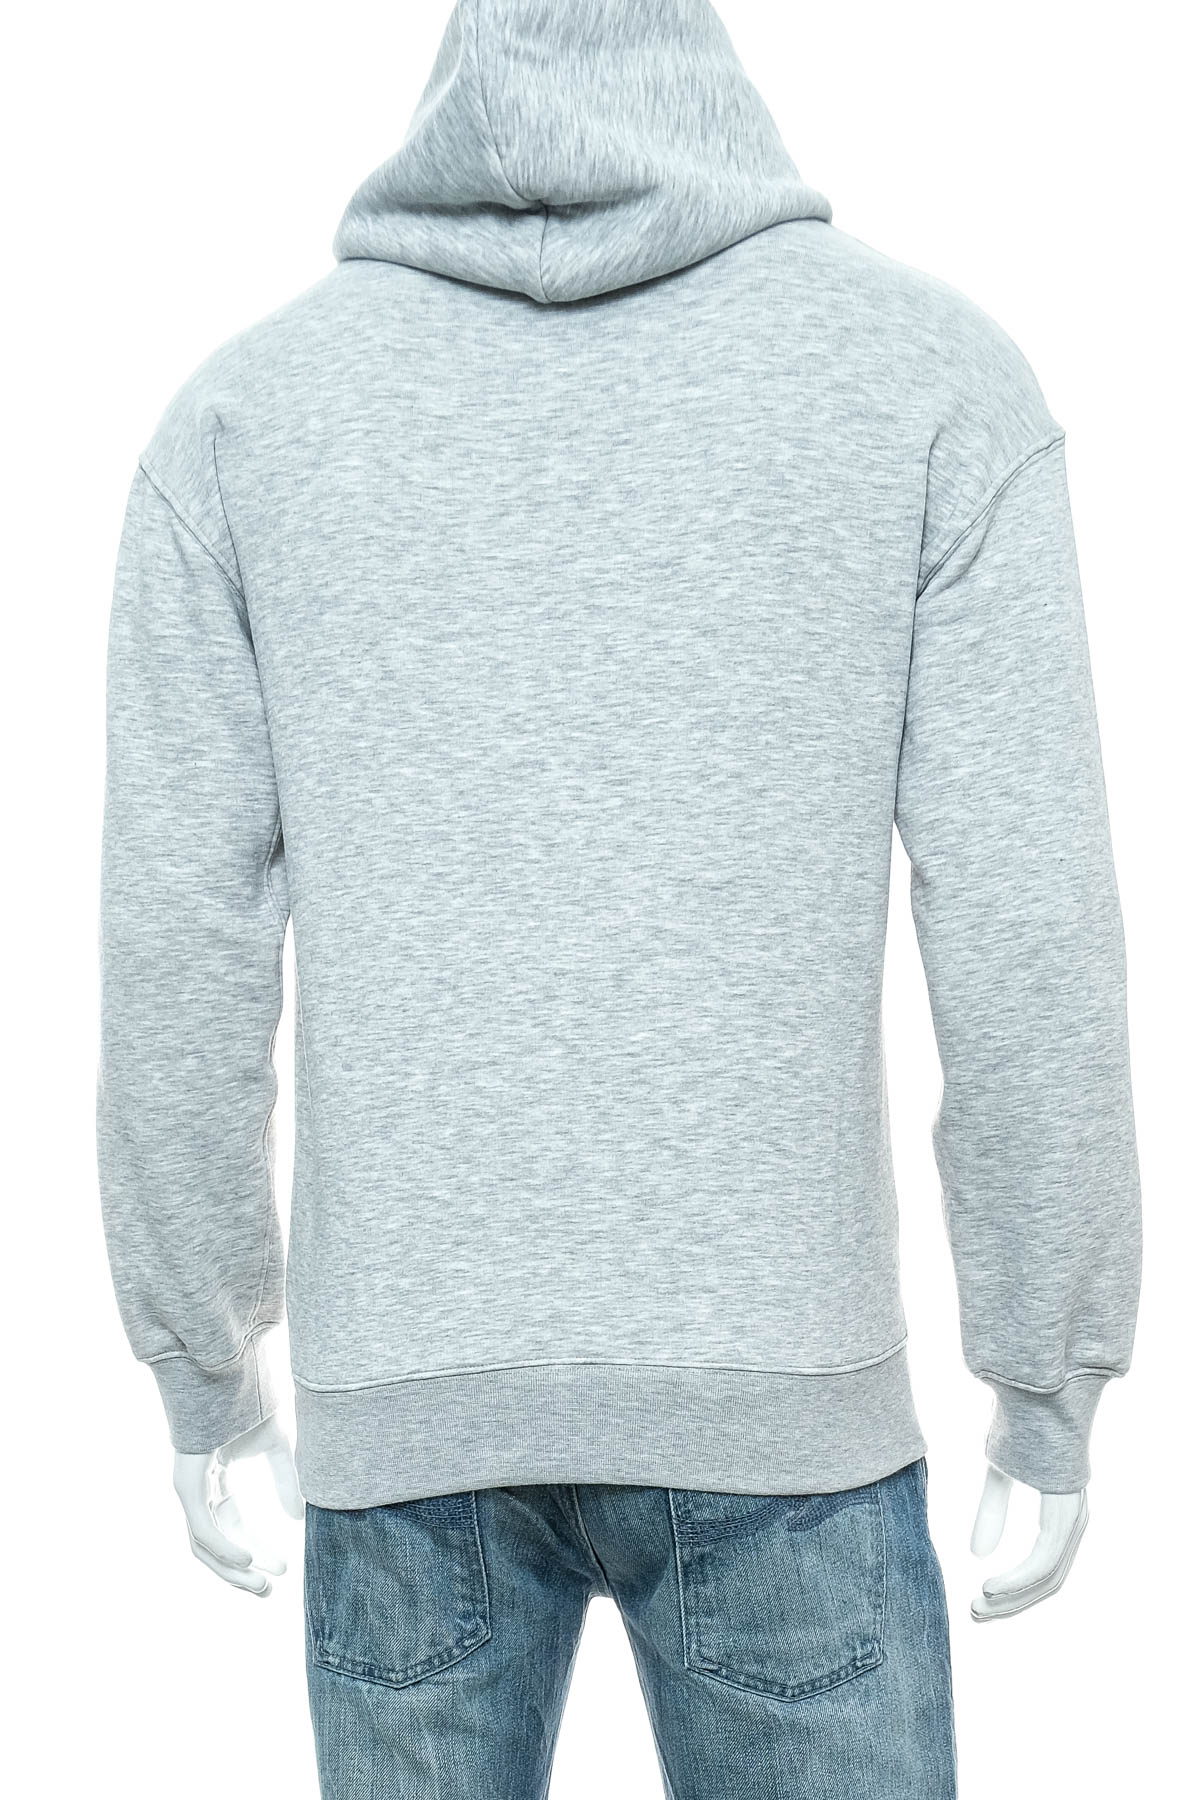 Men's sweatshirt - Puma - 1